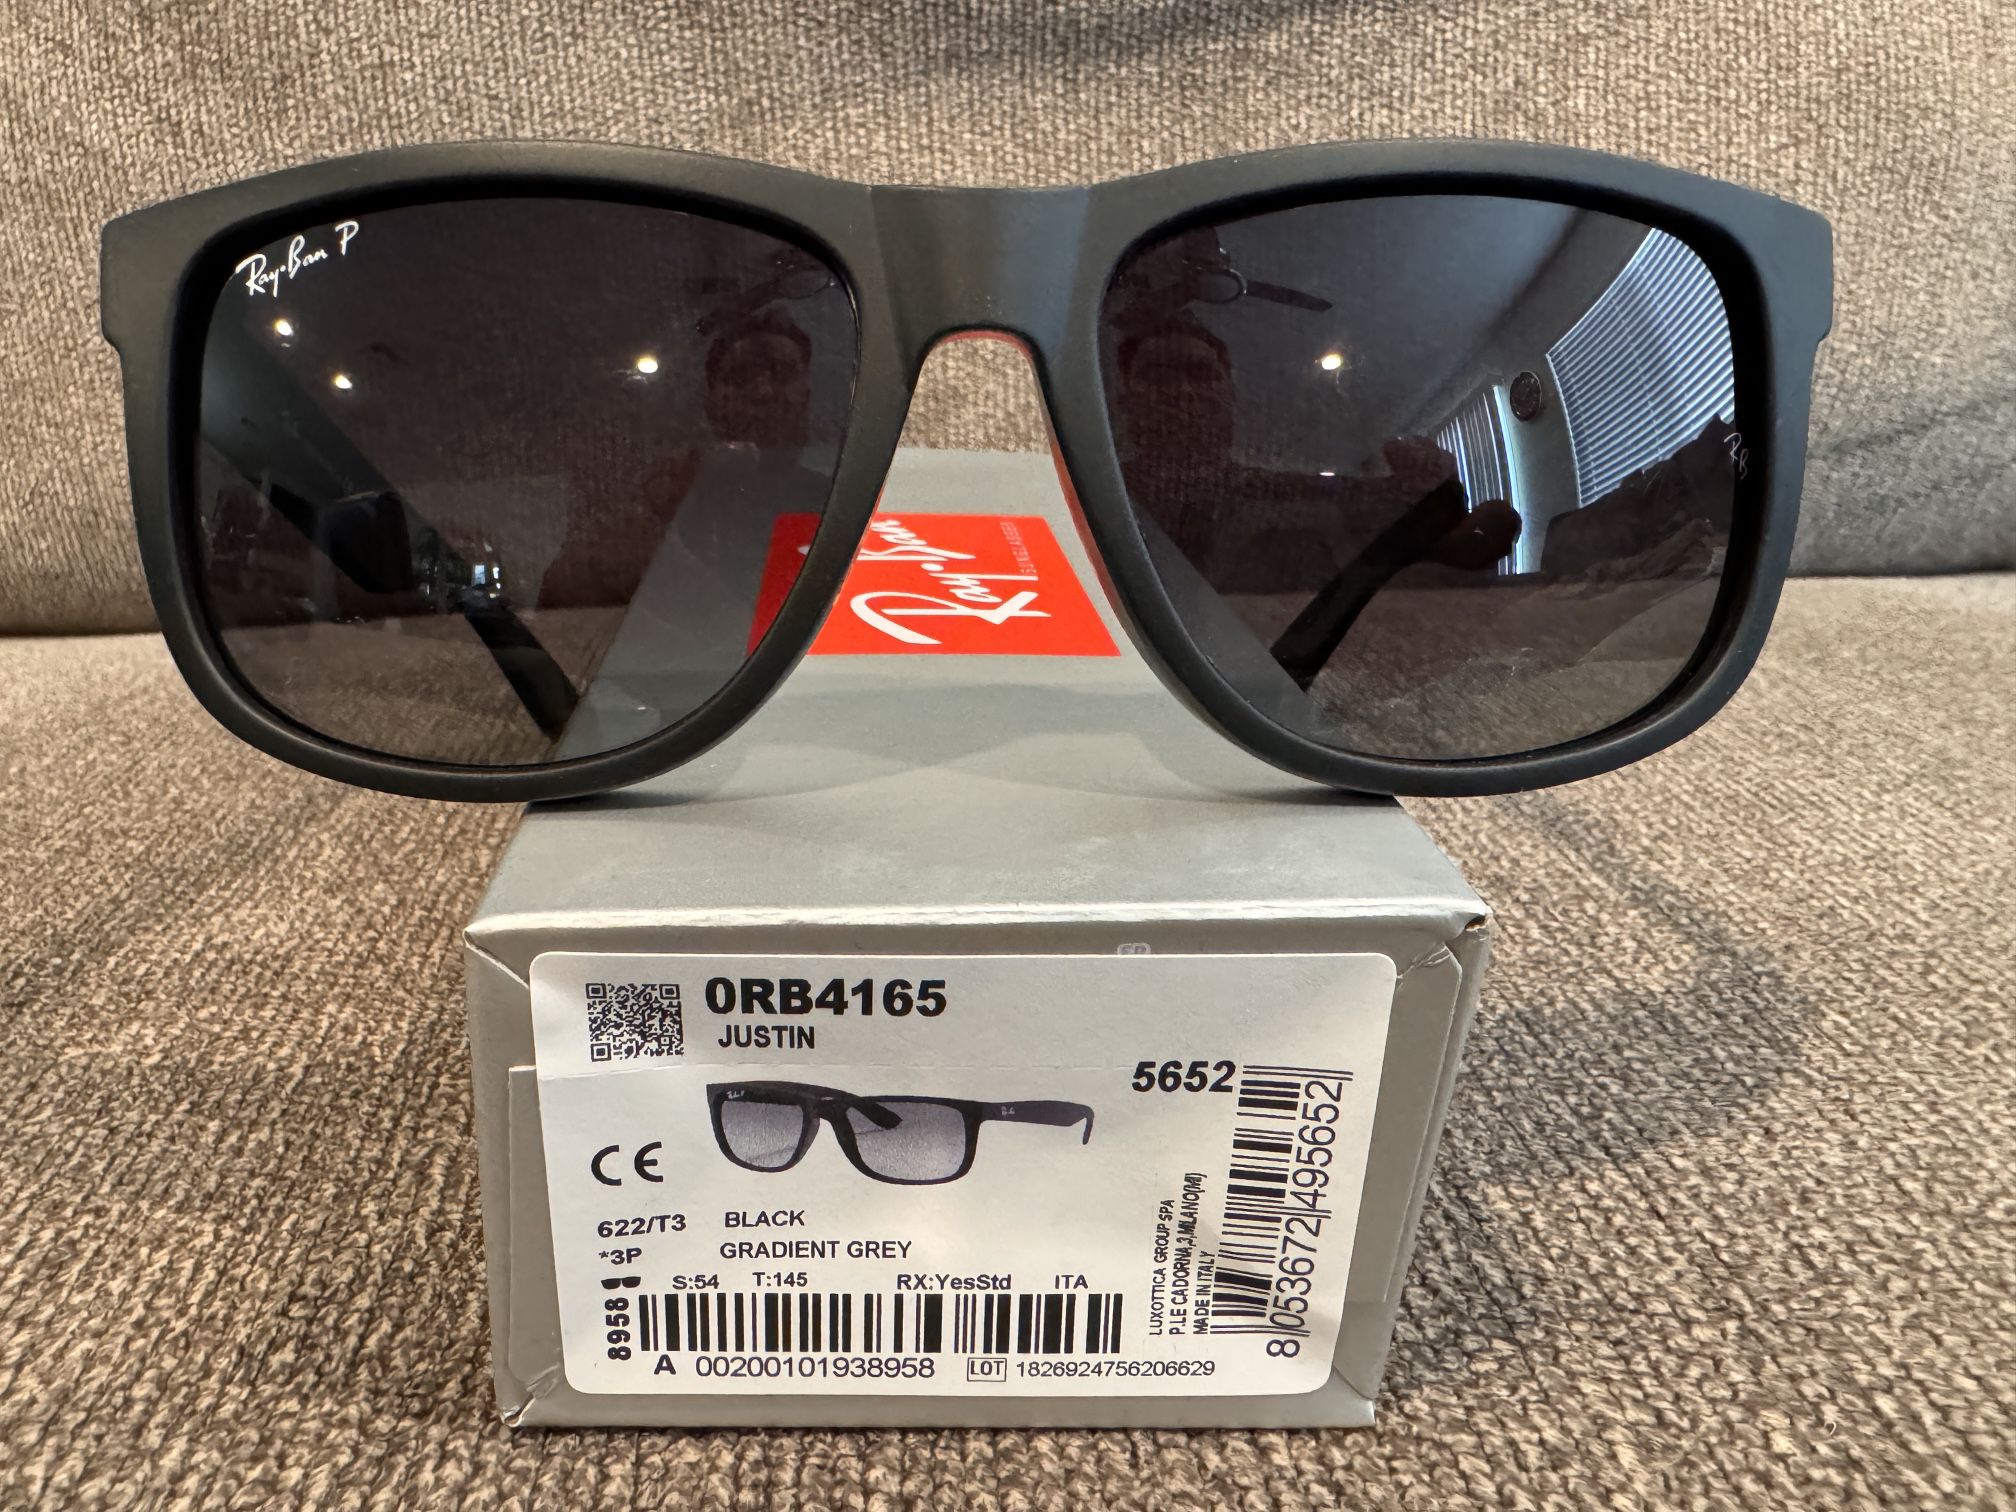 New Ray-Ban RB4165 Justin Matte Black Grey Gradient Sunglasses